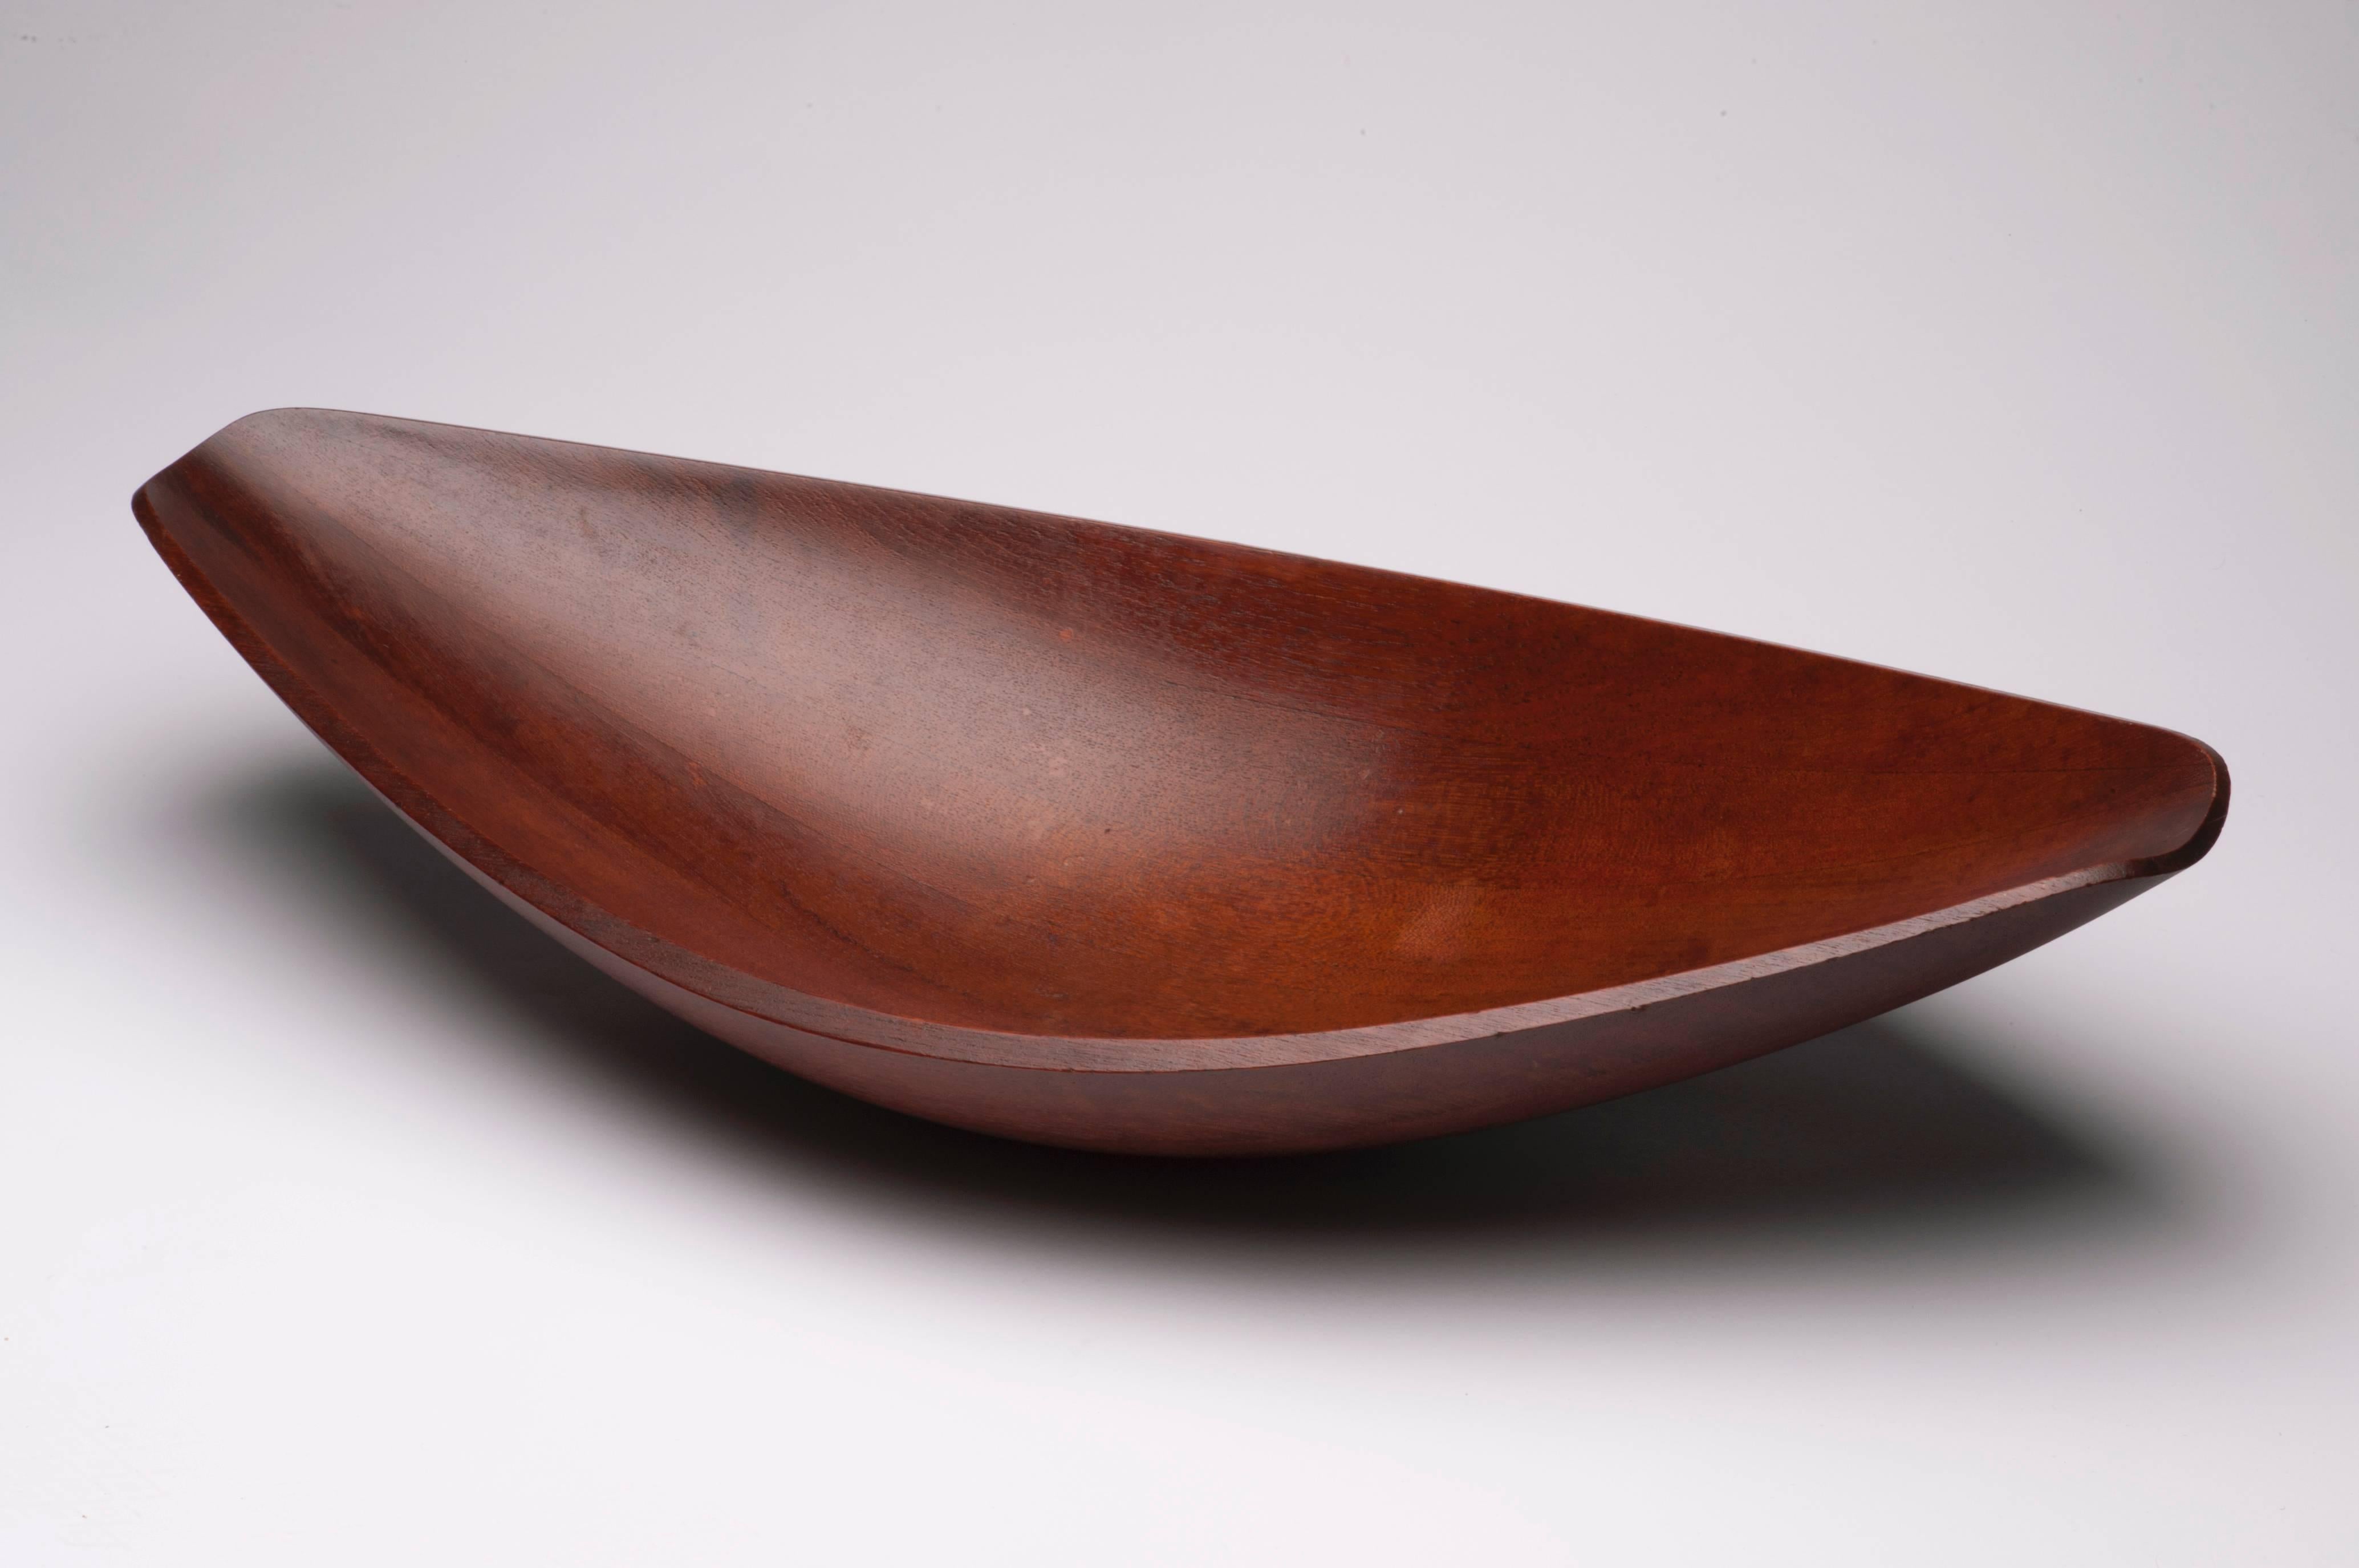 Beautiful large teak bowl by Danish designer Jens Quistgaard. Teak has developed a nice dark patina. Bowl is 25